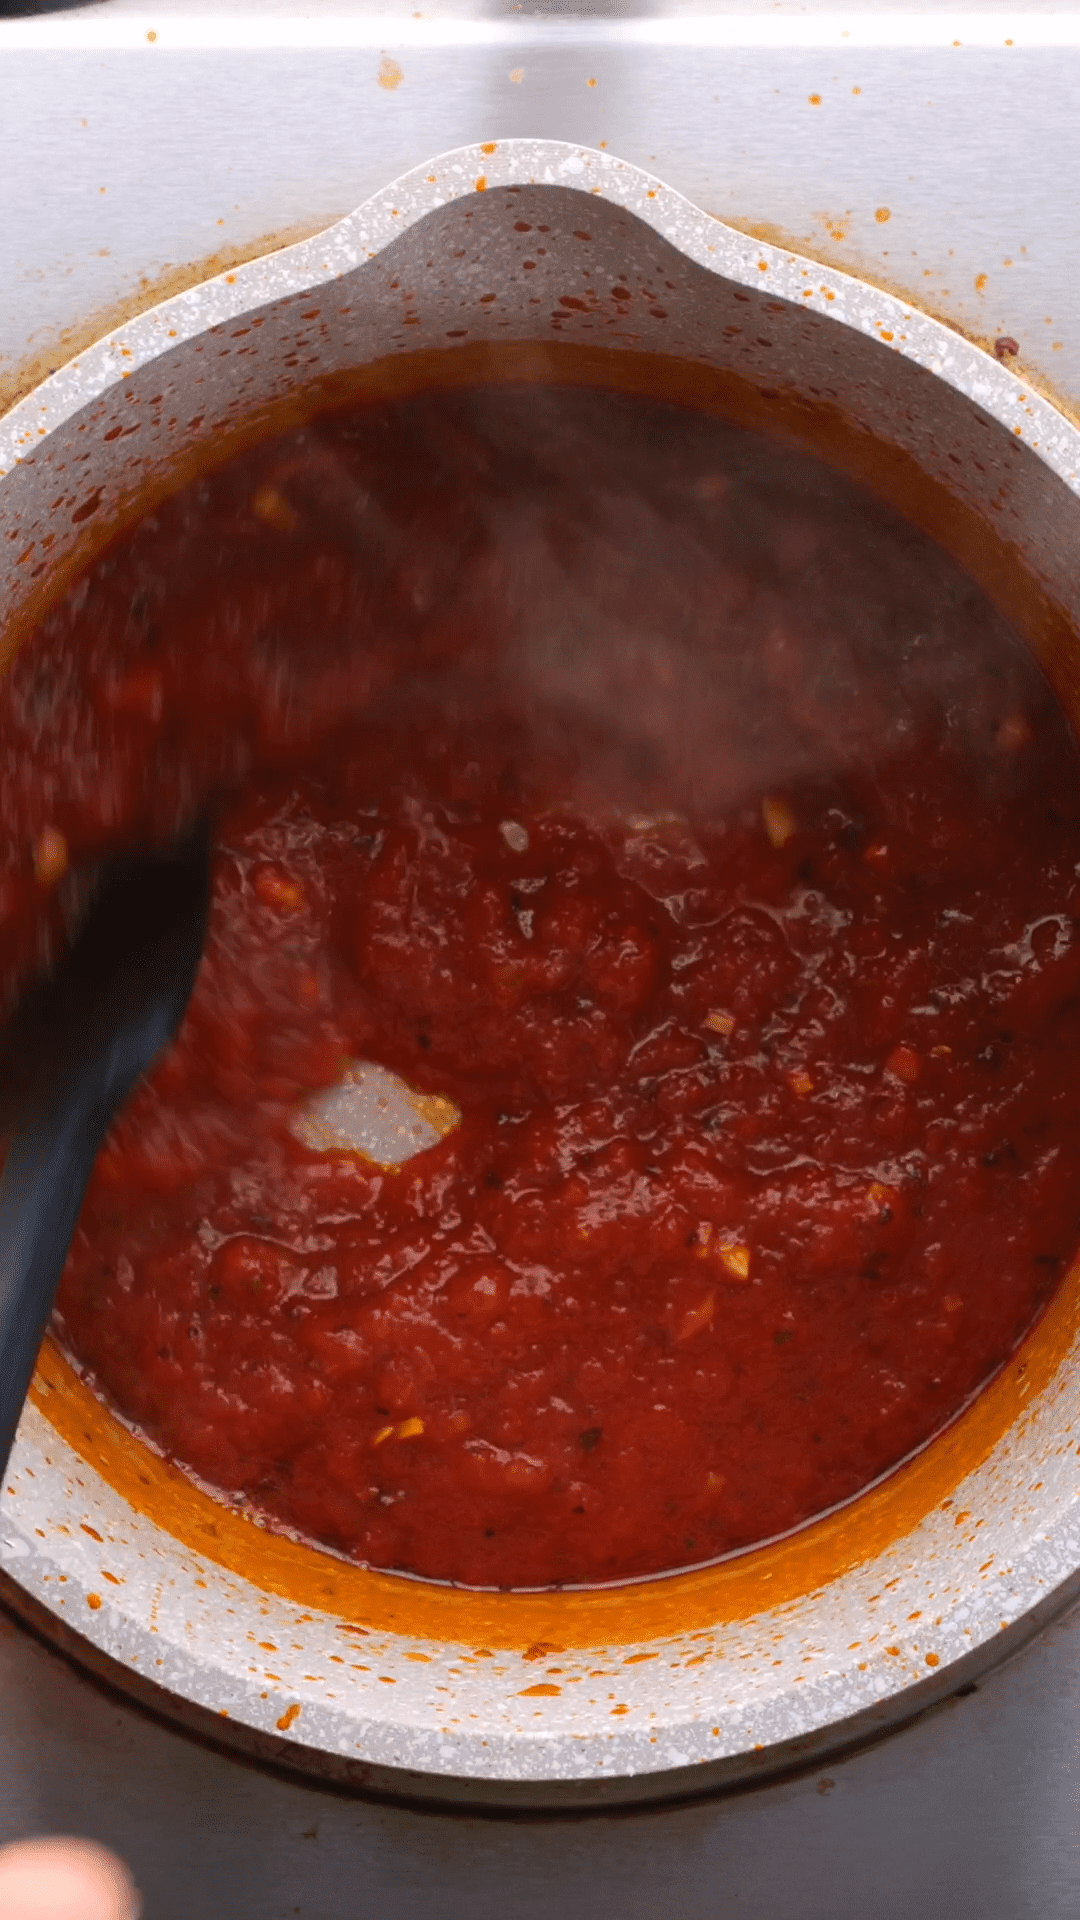 Marinara sauce being made on a stovetop